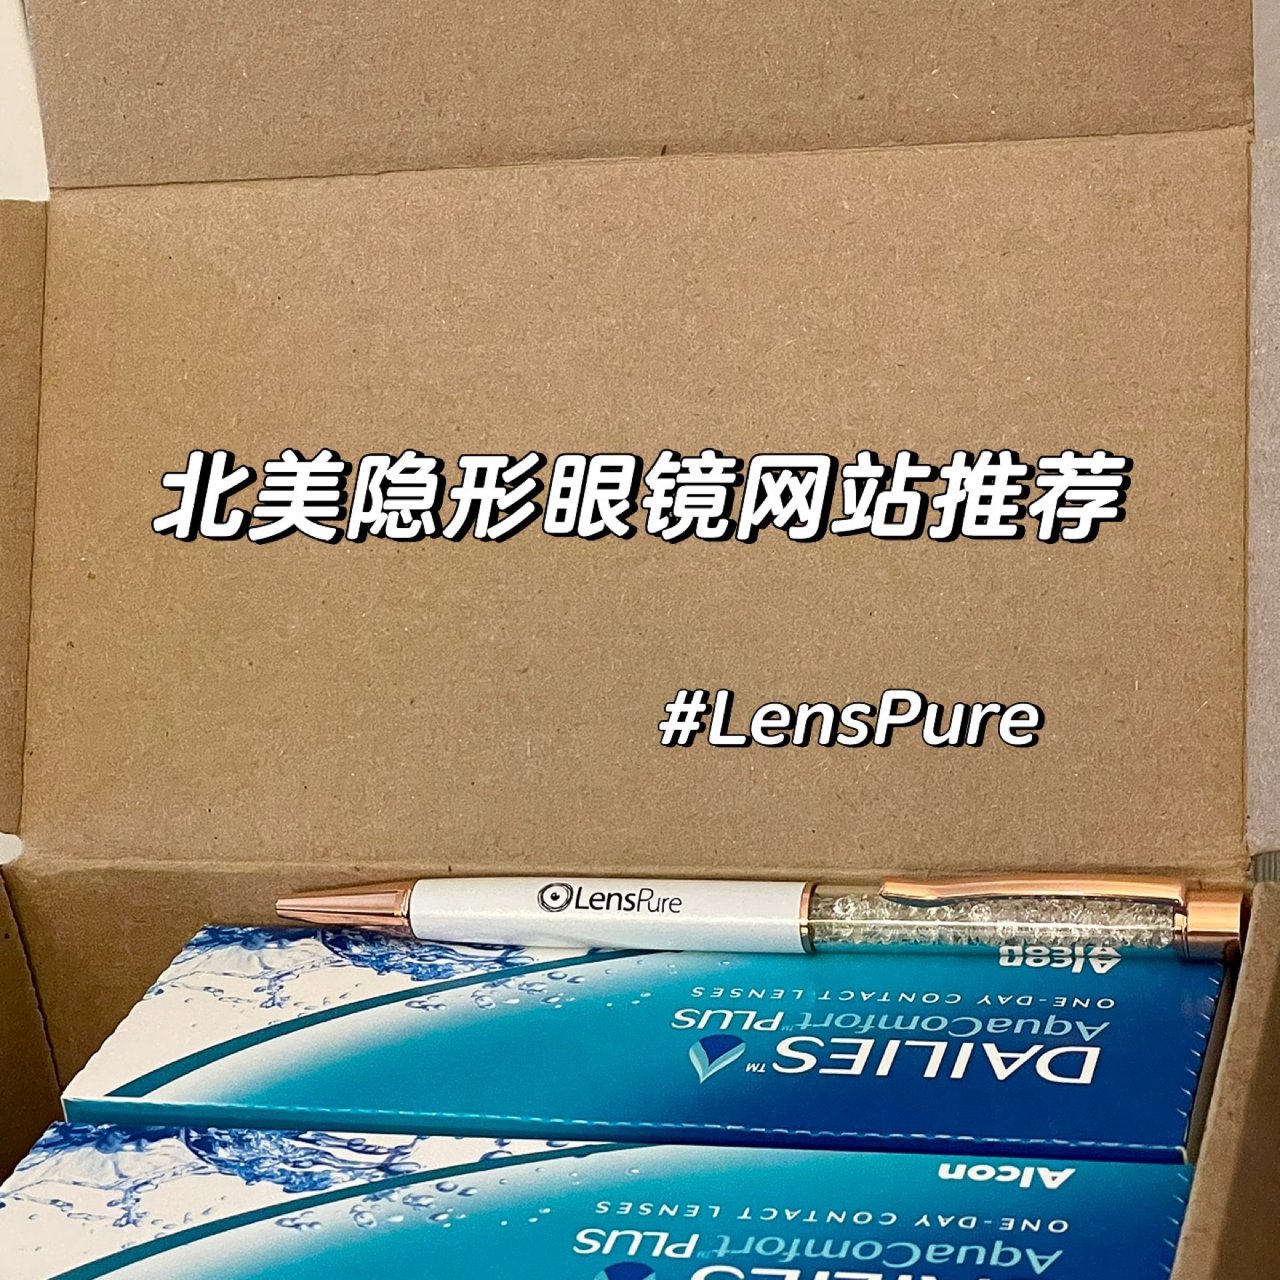 LensPure 1 Day Acuvue Moist隐形眼镜促销活动